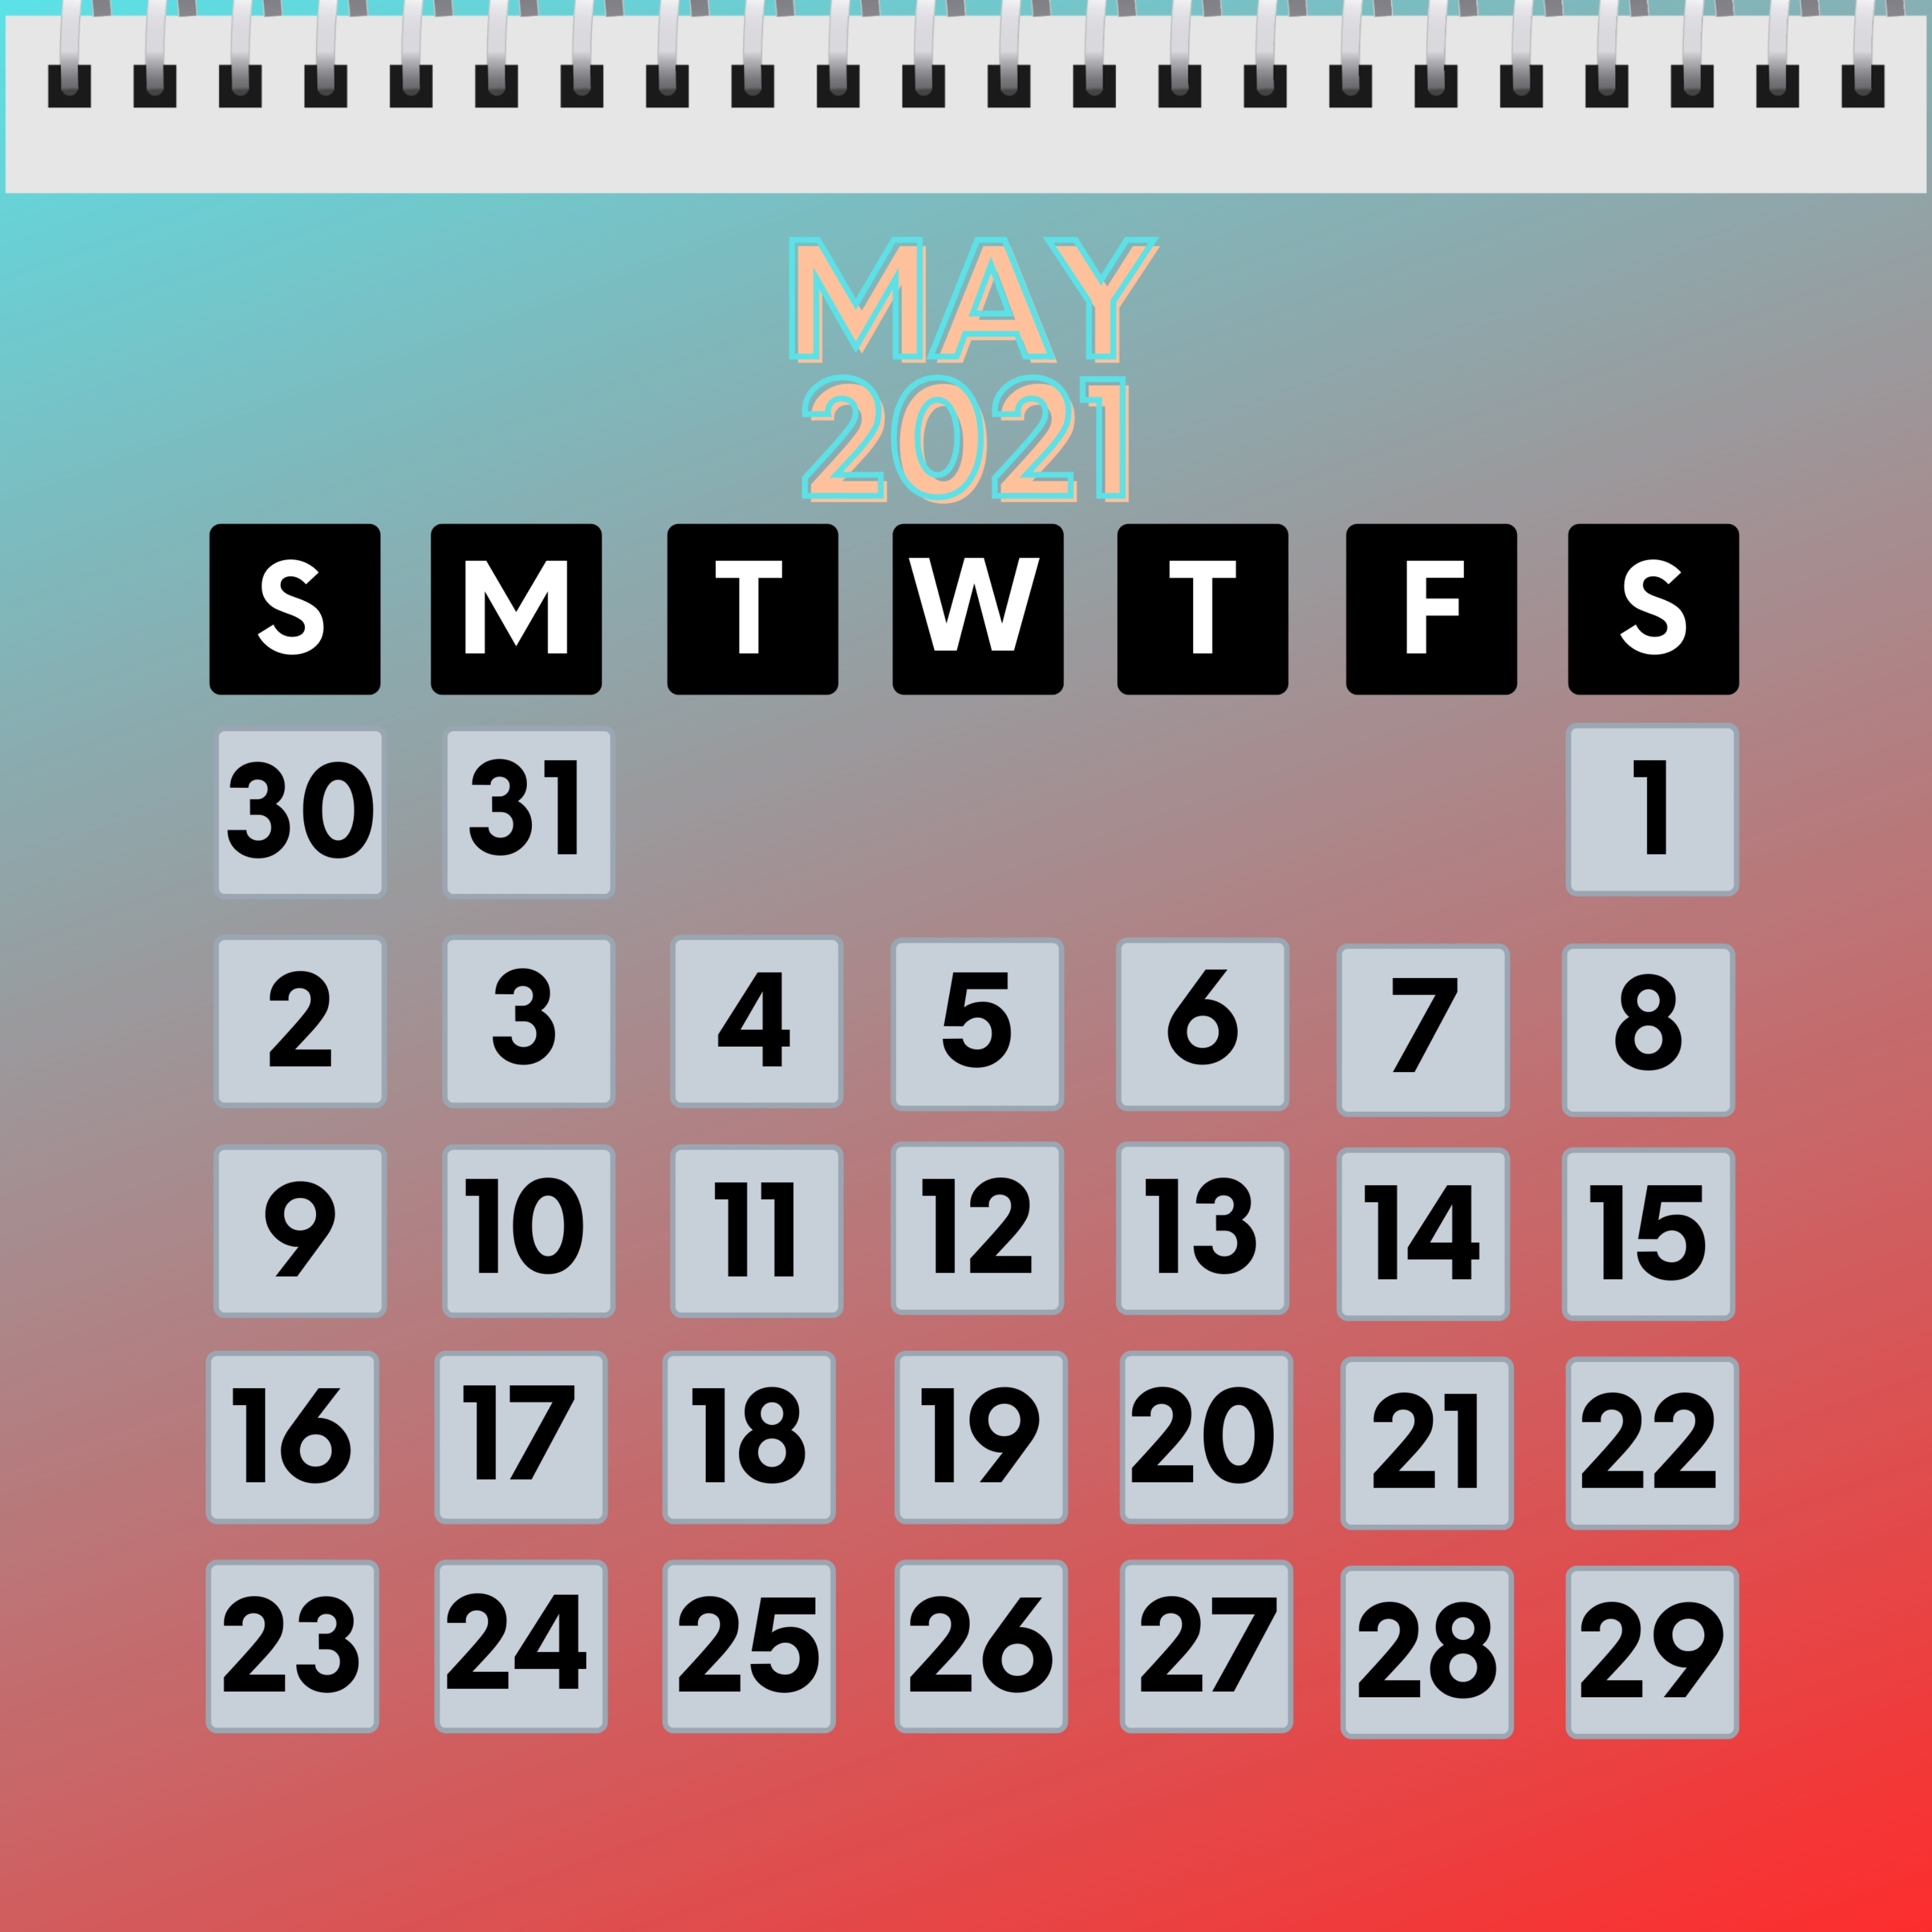 iPad Wallpapers May 2021 Calendar iPad Wallpaper 3208x3208 px